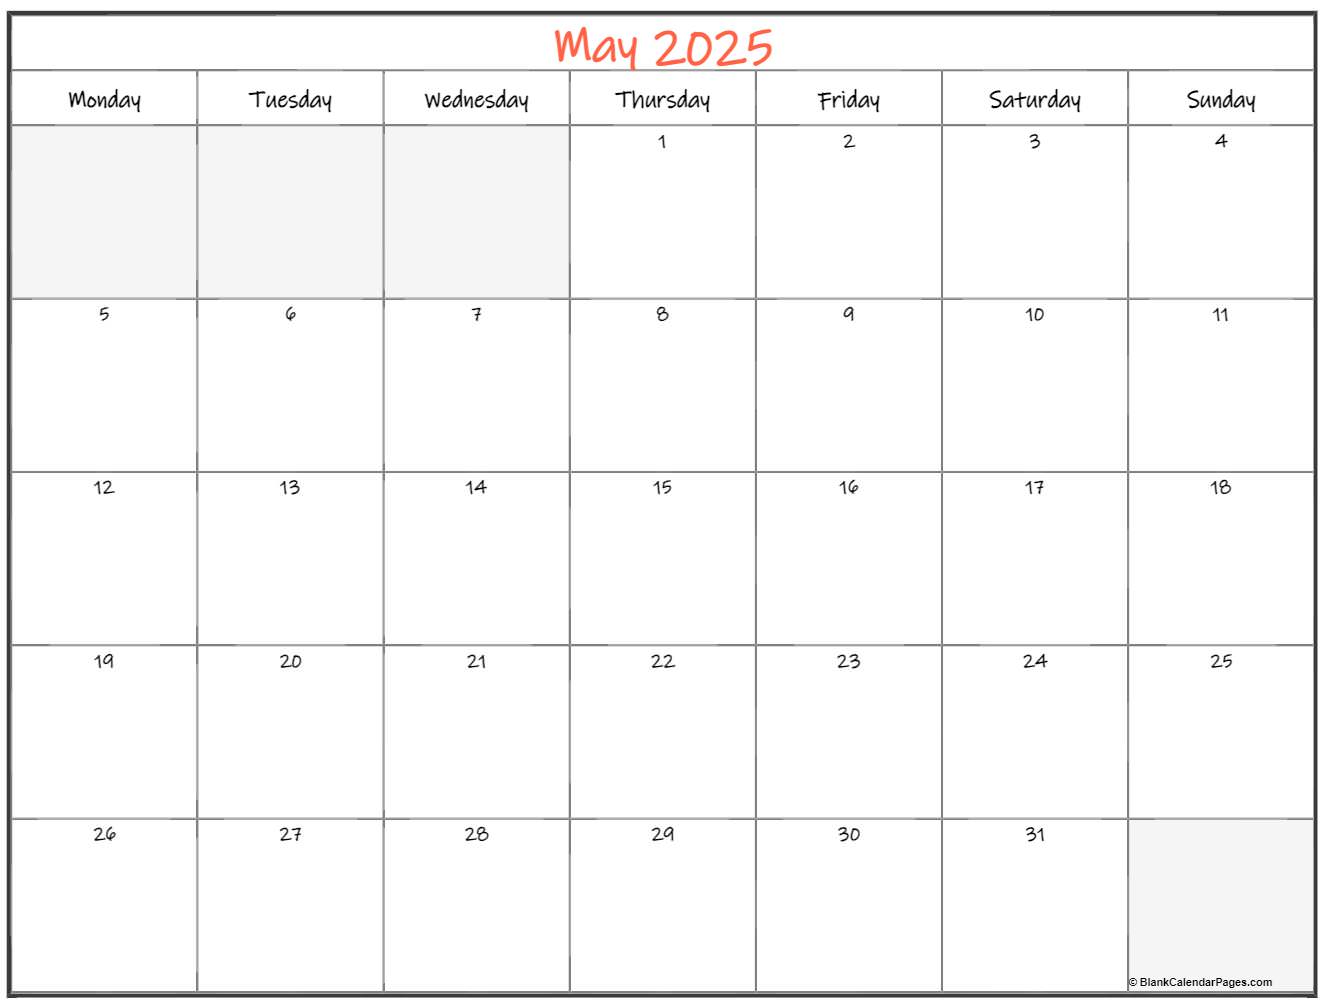 May 2025 Monday calendar. Monday to Sunday